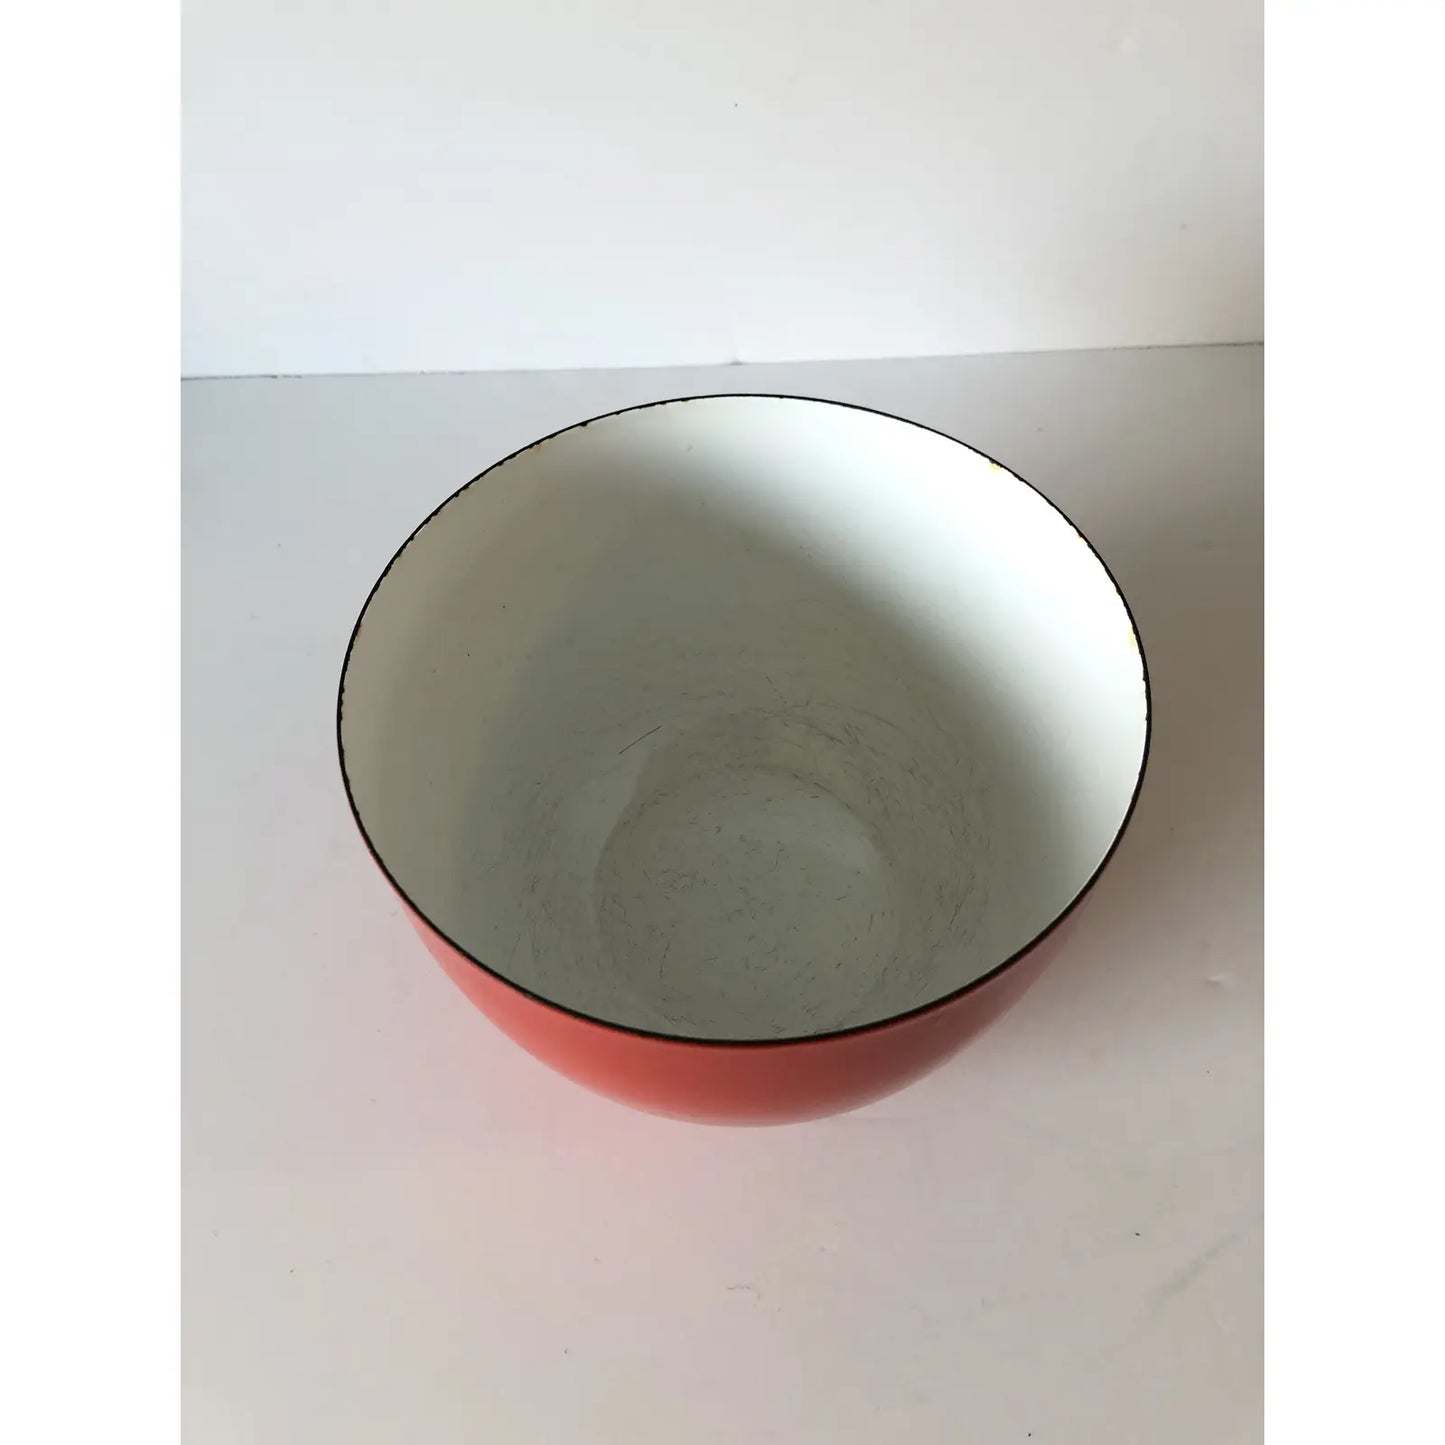 1960s Kaj Franck l Enamel Danish Modern Red and White Bowl